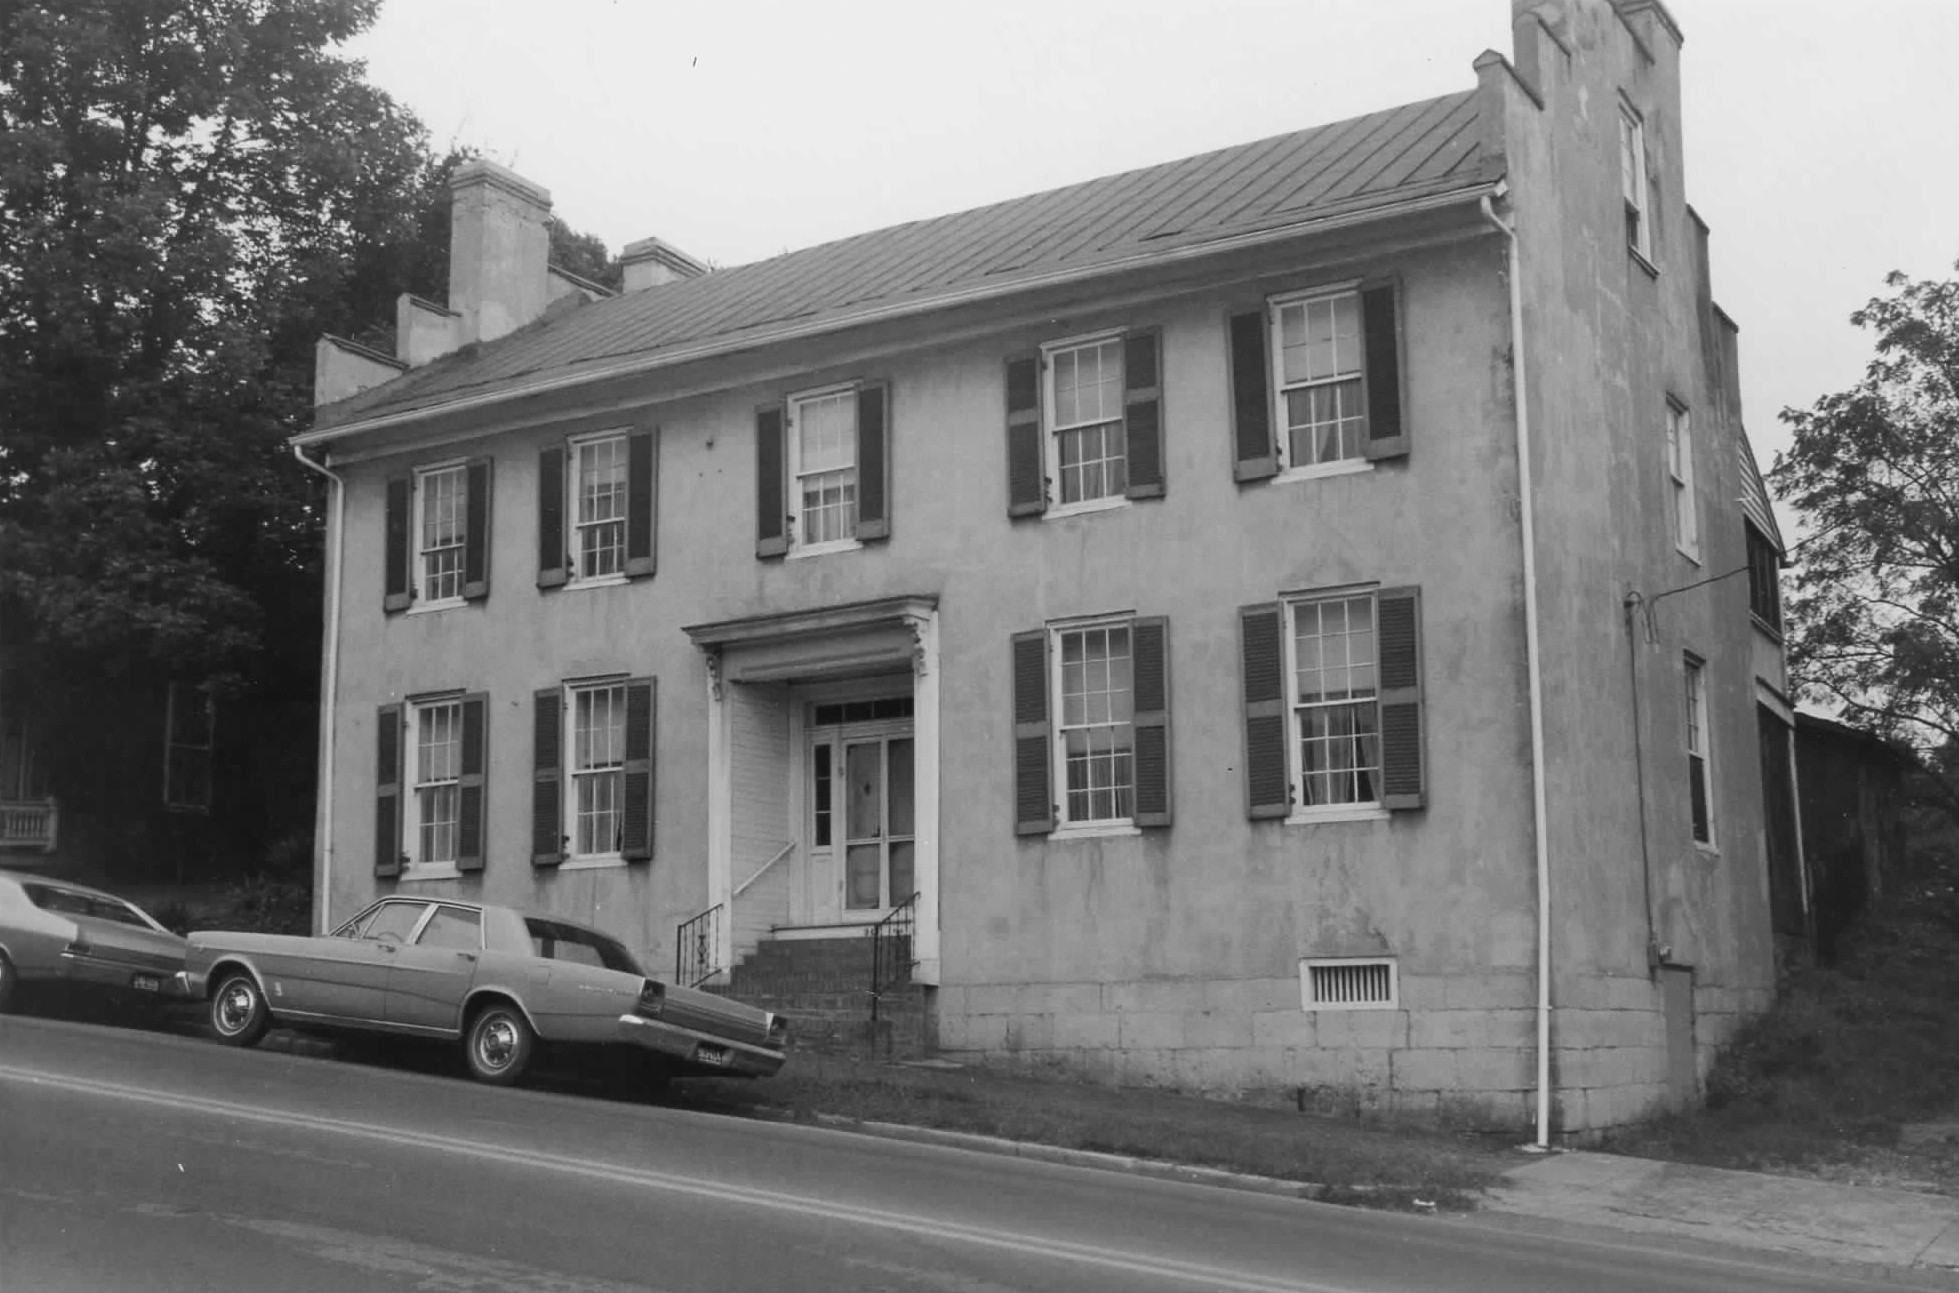 Dr. Pitts House. Photo credit: Junius Fishburne/DHR, 1968